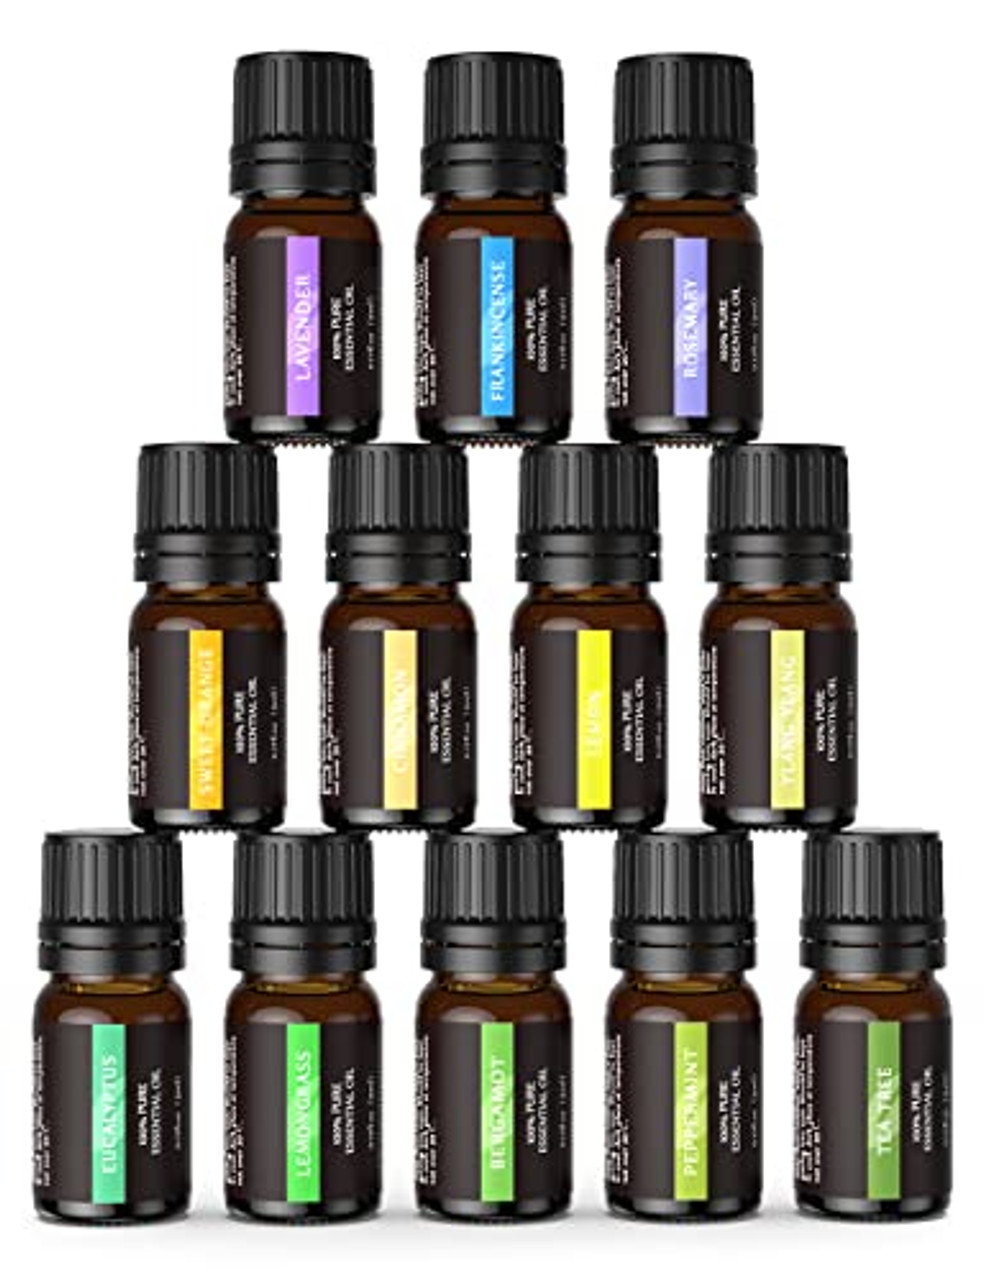 AOSNO Essential Oil Top 12*5ml Essential Oils for Diffusers for Home, Pure  Aromatherapy Oils, Lavender, Peppermint, Eucalyptus, Lemongrass, Orange,  Tea Tree, Bergamot, Cinnamon, Rosemary and More